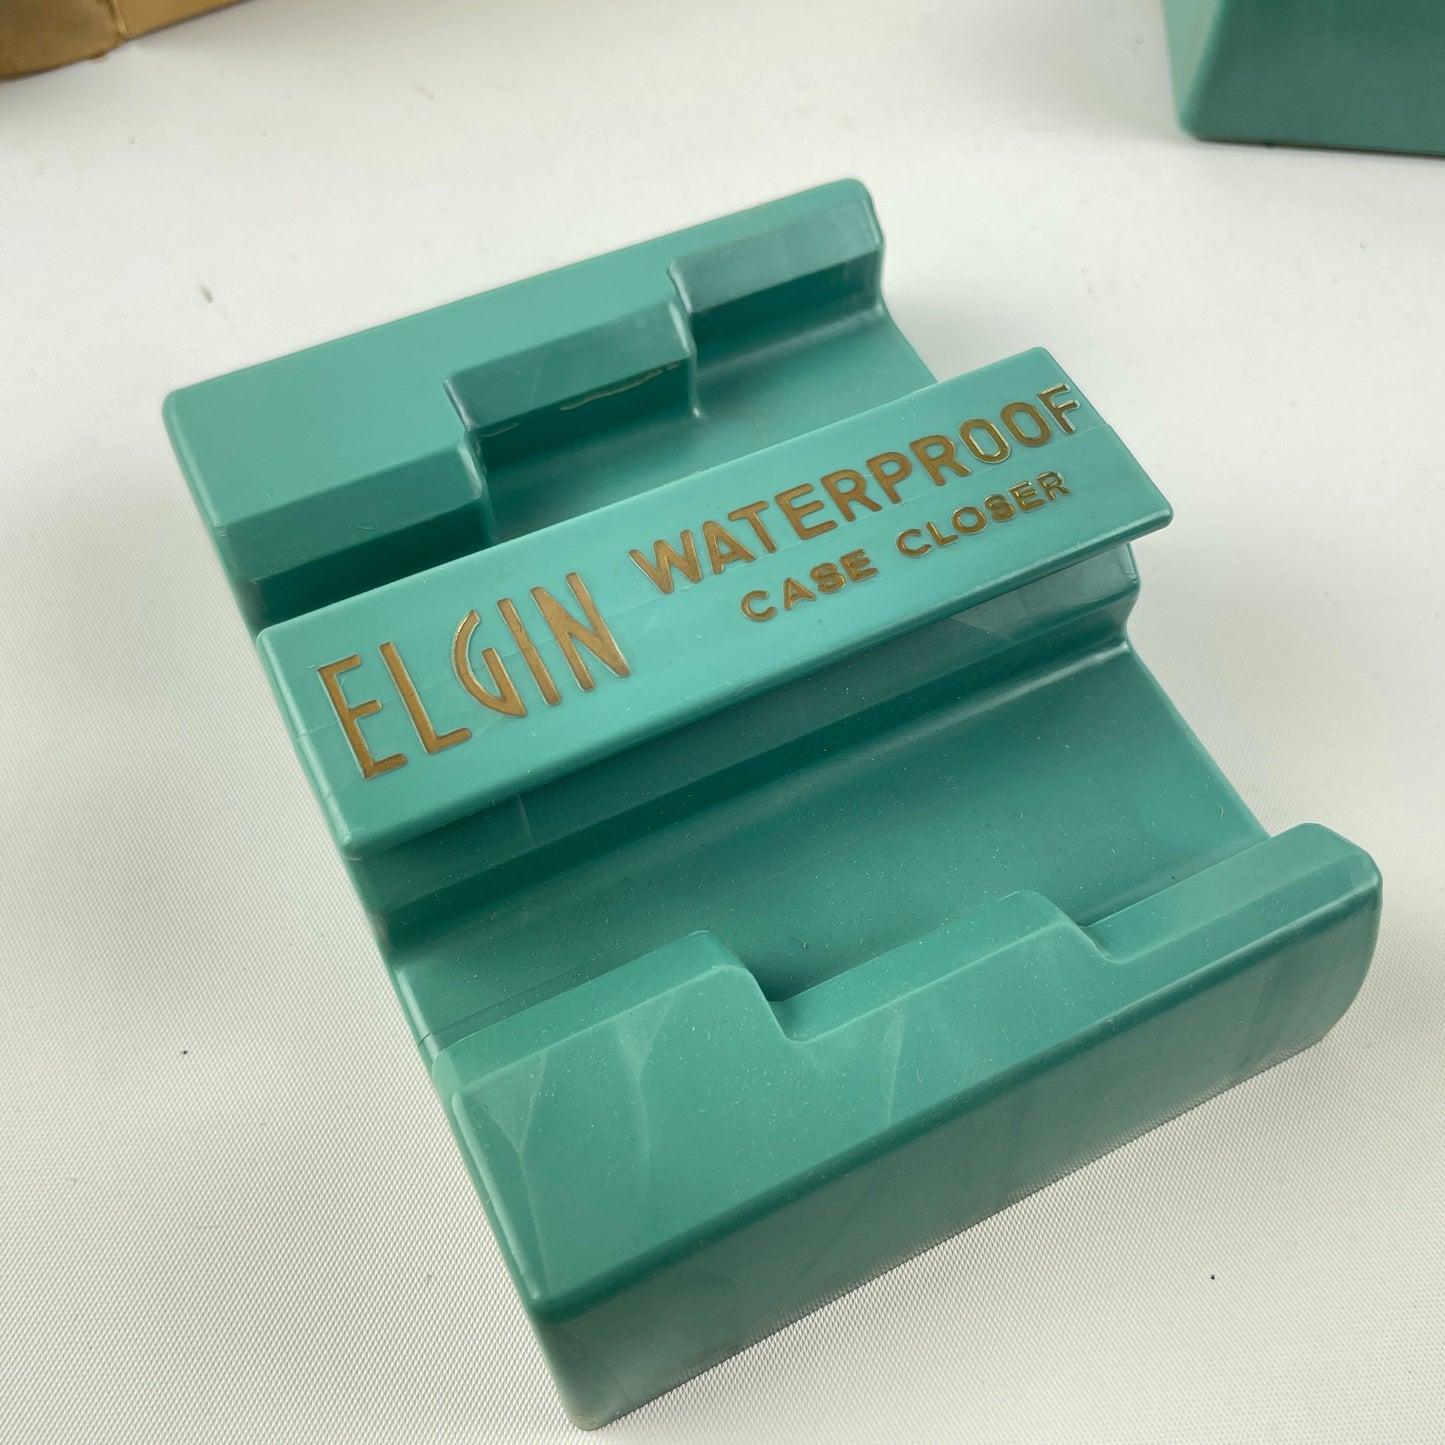 Elgin Waterproof Case Closer Tool (2)